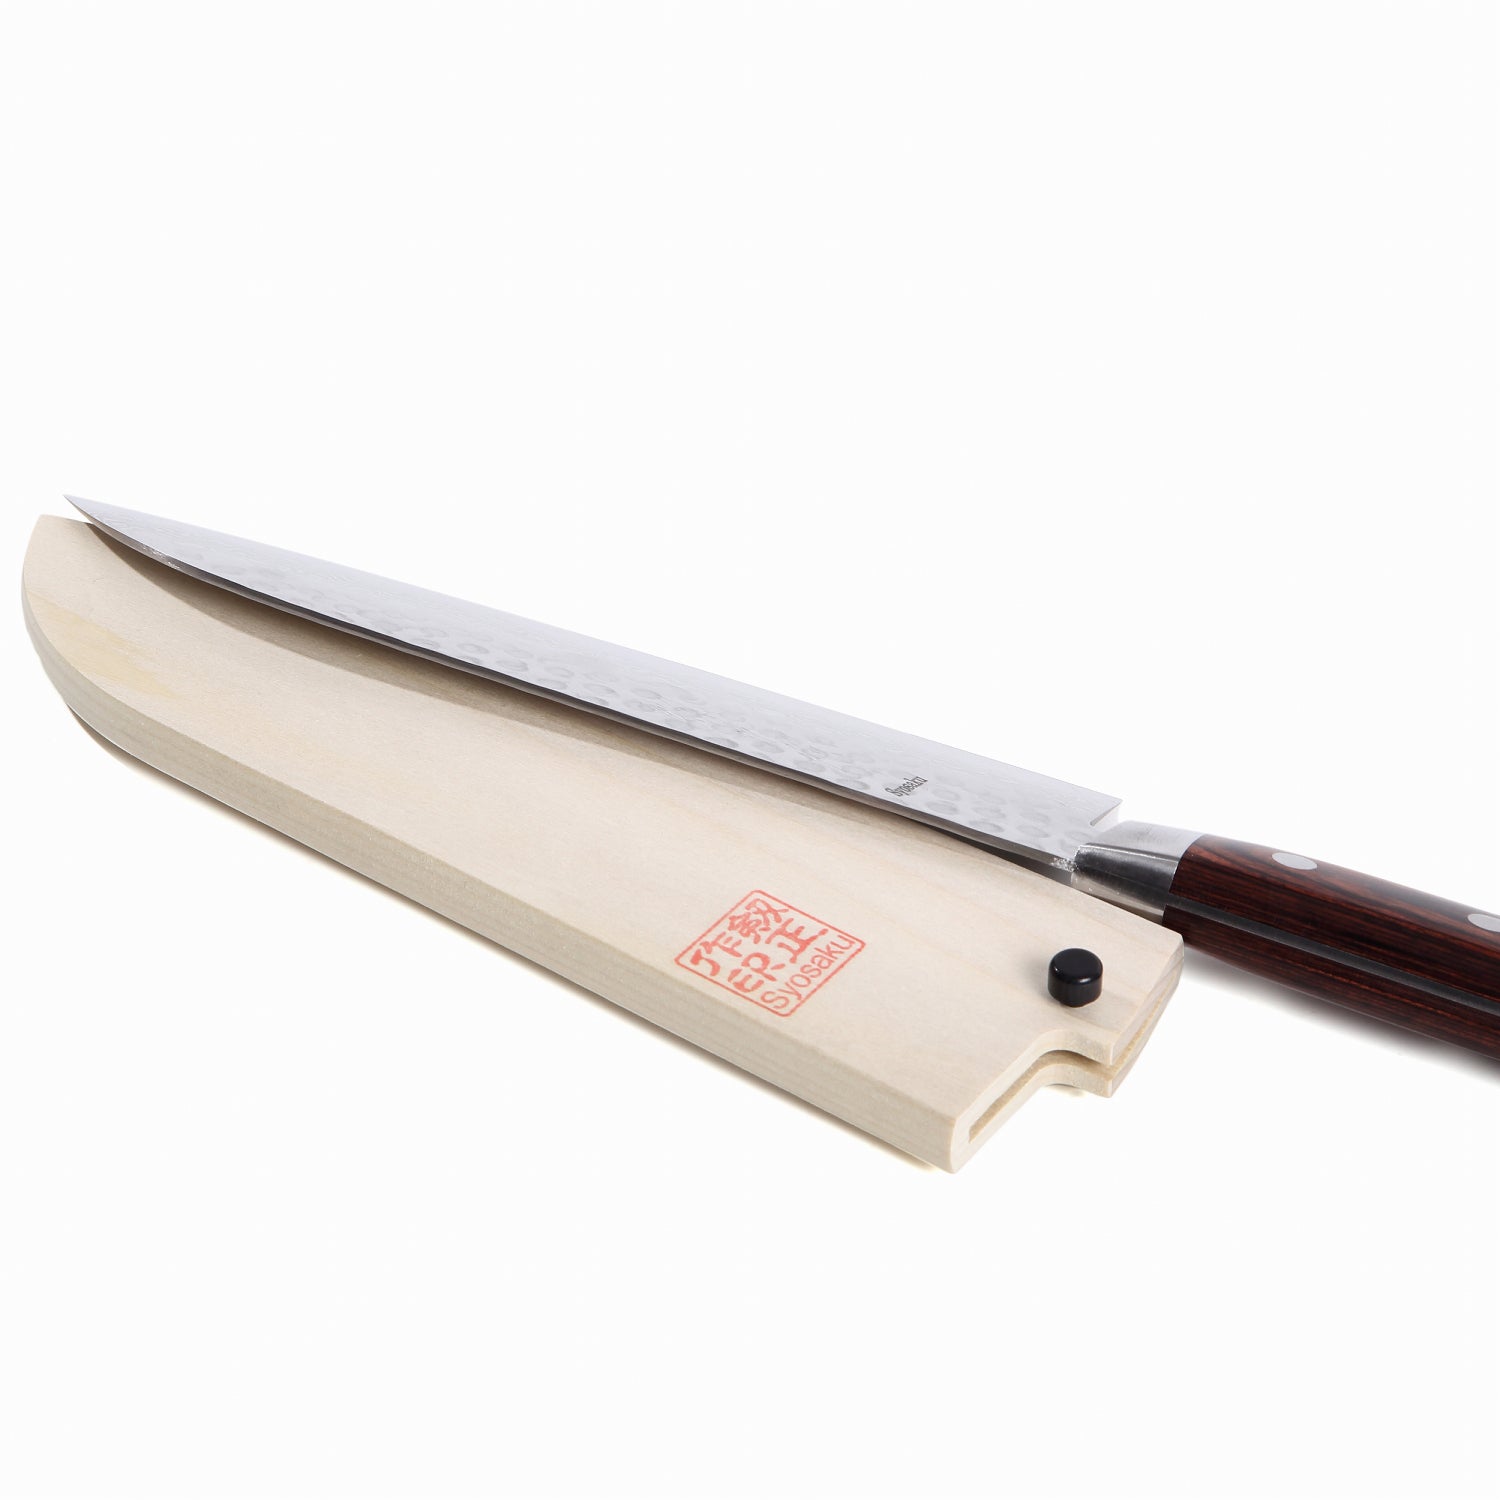 Syosaku Japanese Multi-Purpose Knife Hammered Damascus VG-10 16 Layer Mahogany Handle, Santoku 7-inch (180mm) with Magnolia Wood Sheath Saya Cover